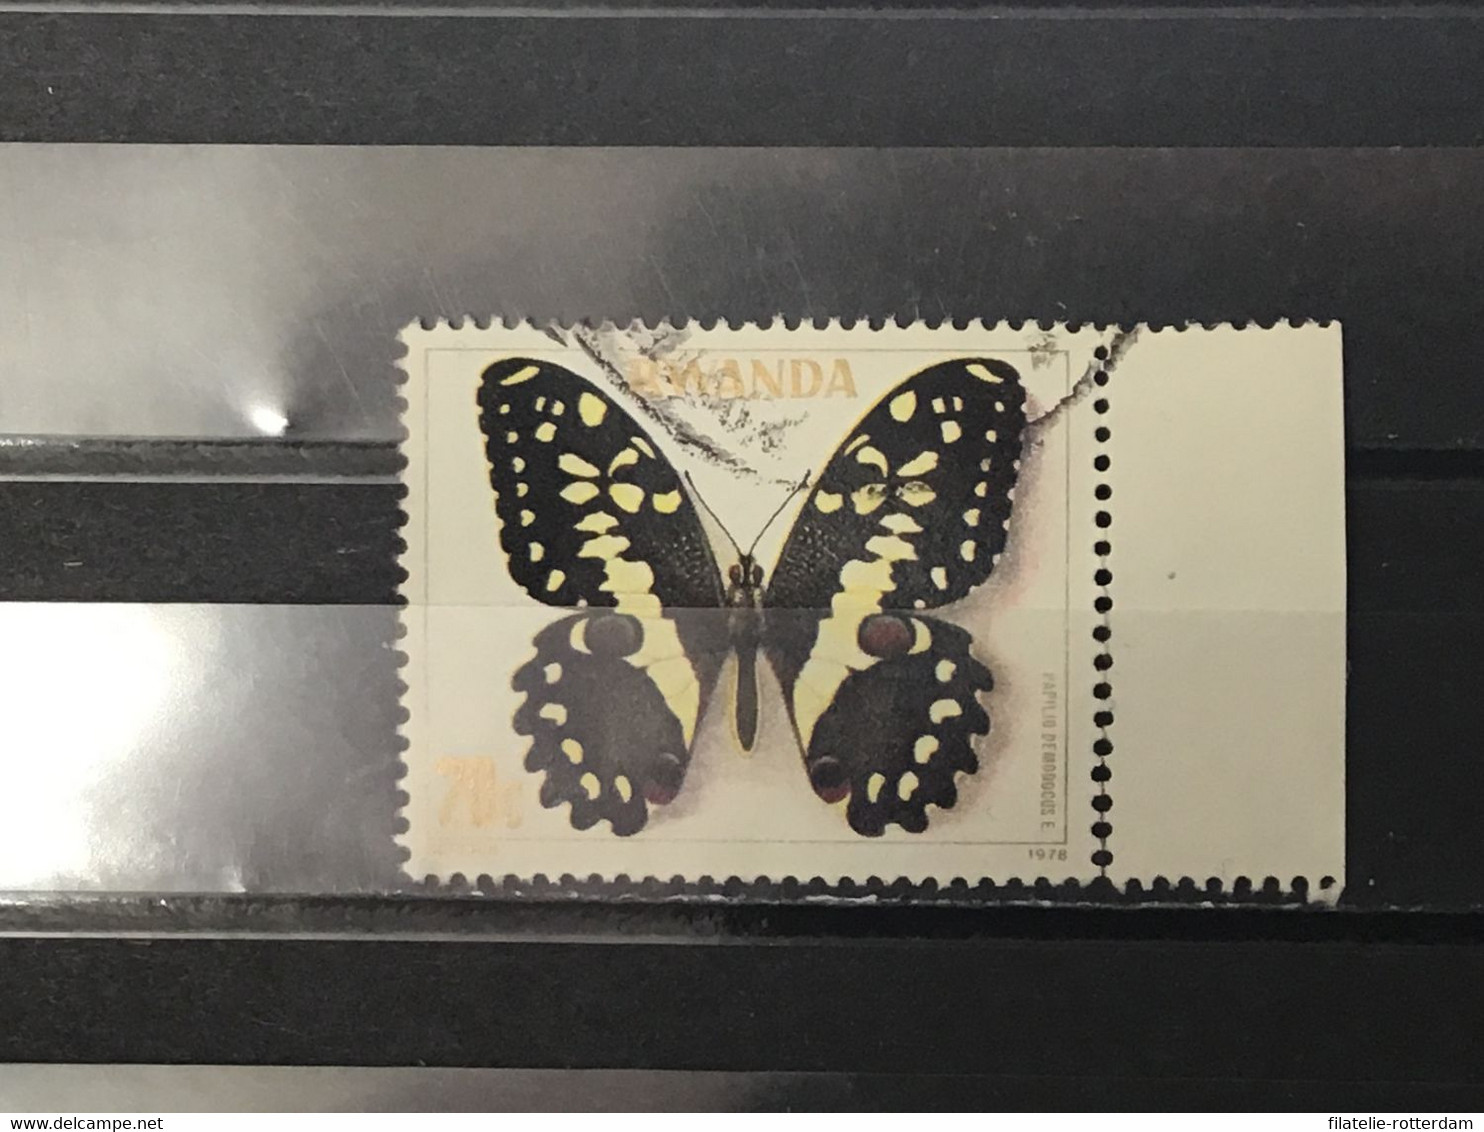 Rwanda - Vlinders (20) 1979 - Gebraucht